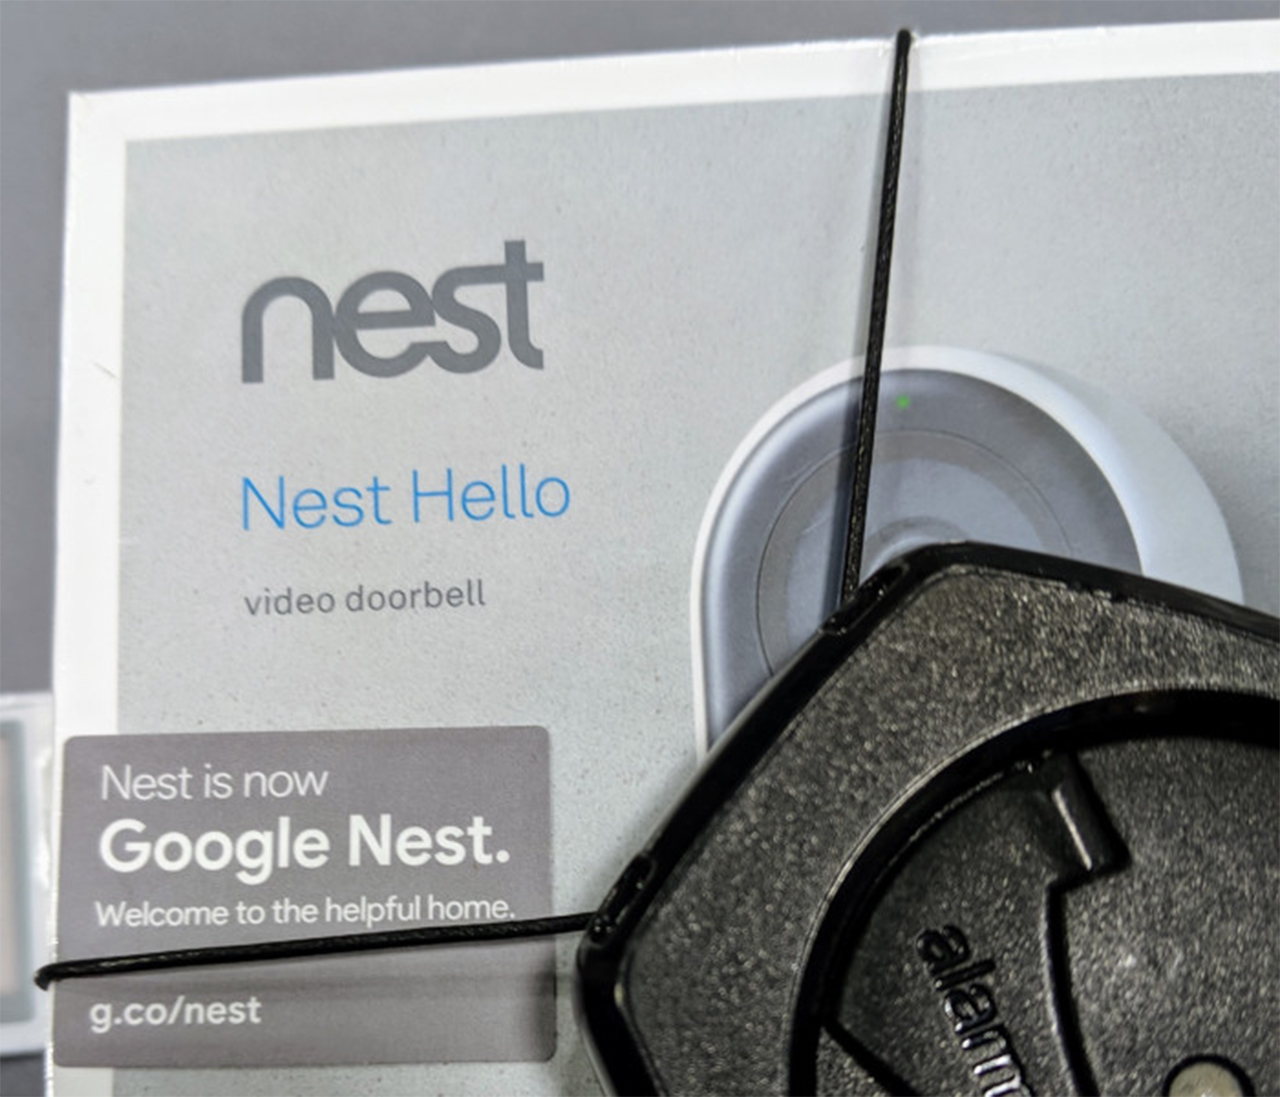 Nest Hello with Google Nest branding